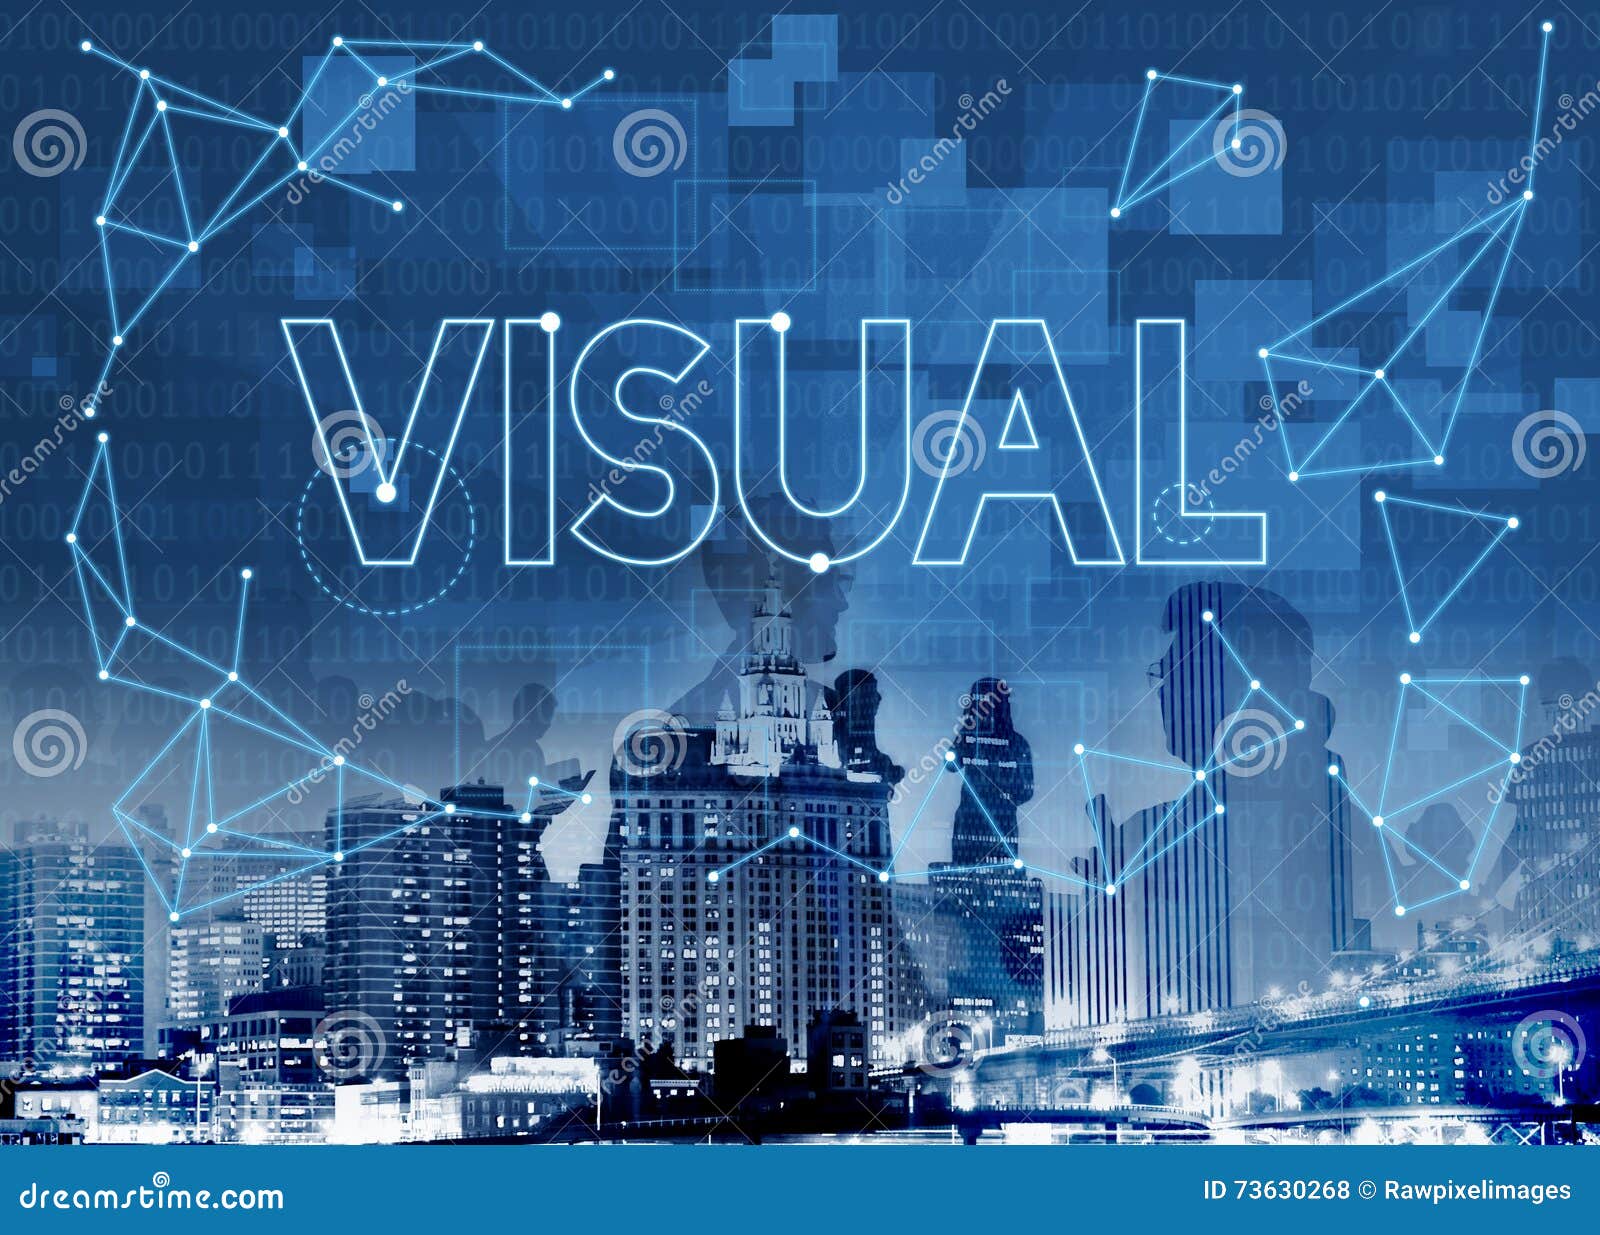 visual innovation creative thinking visibility concept